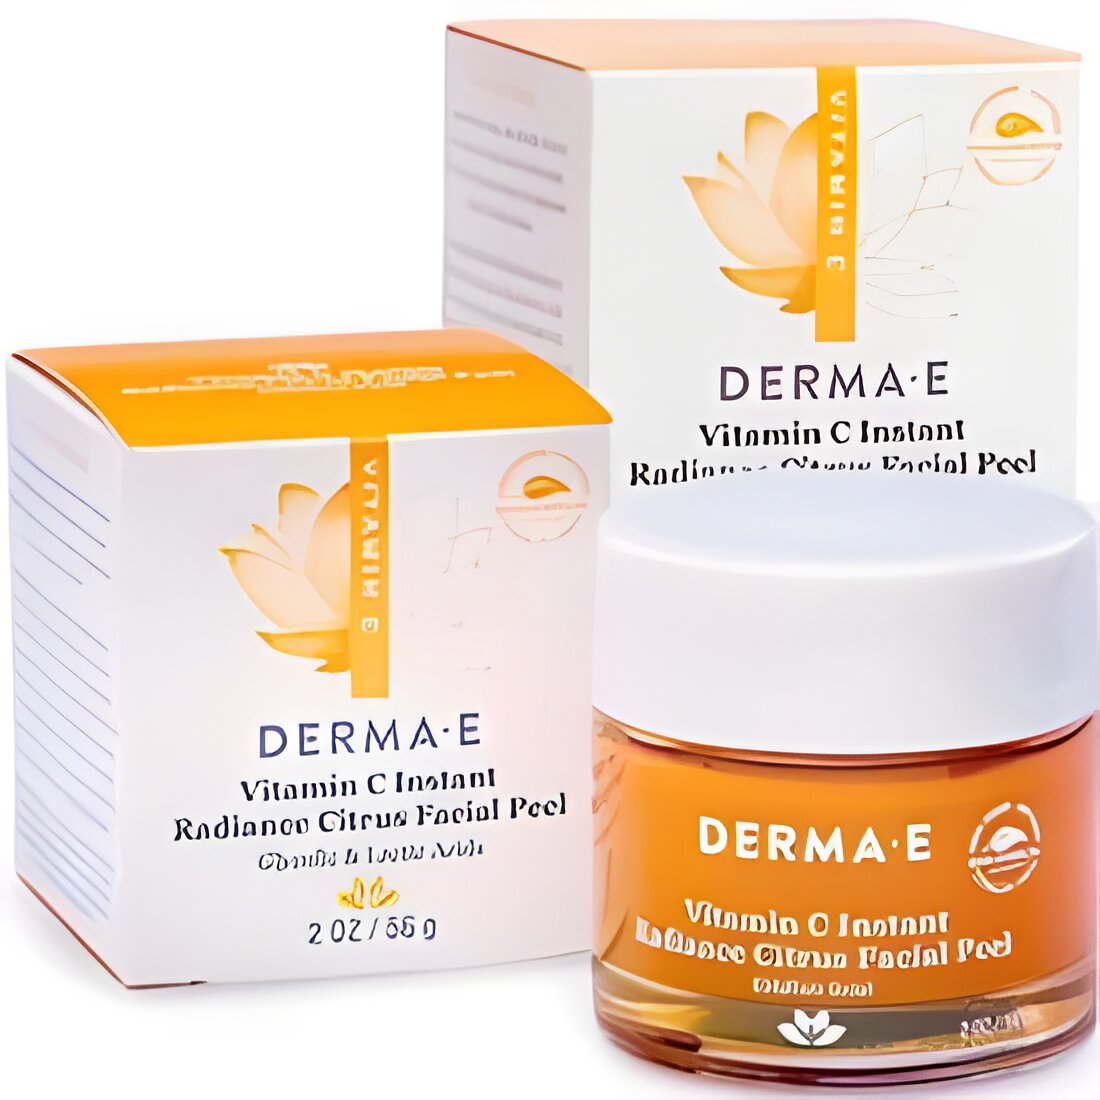 Free Derma E Vitamin C Instant Radiance Citrus Facial Peel Samples